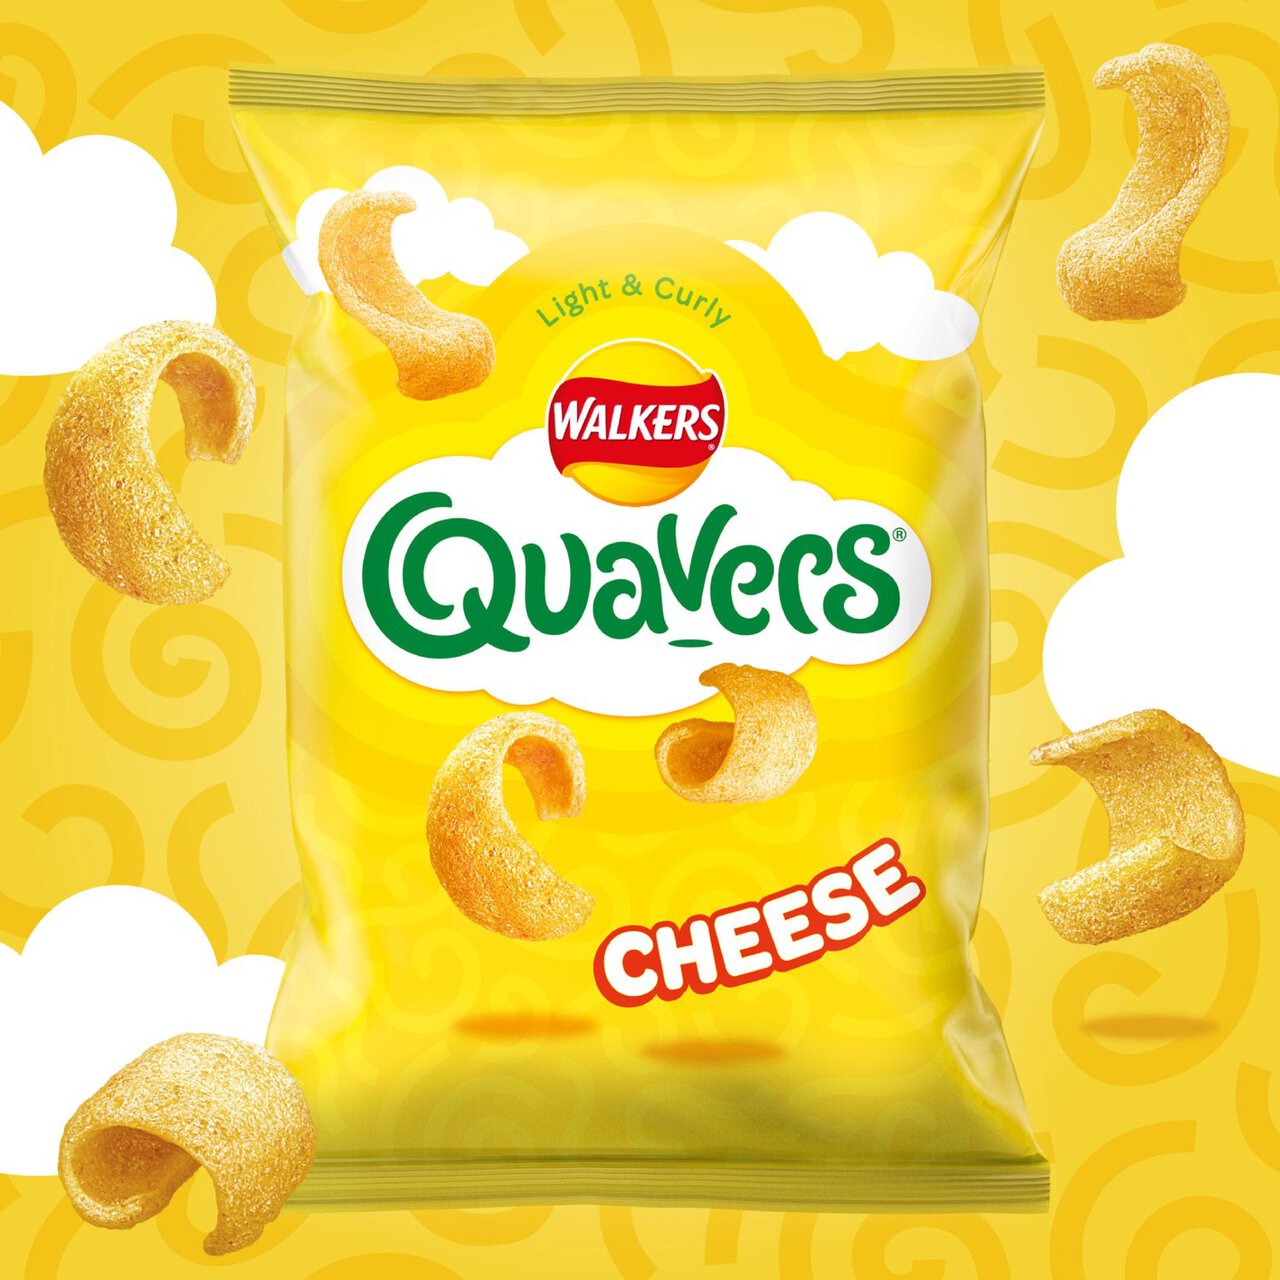 Walkers Quavers Cheese Snacks 6 per pack